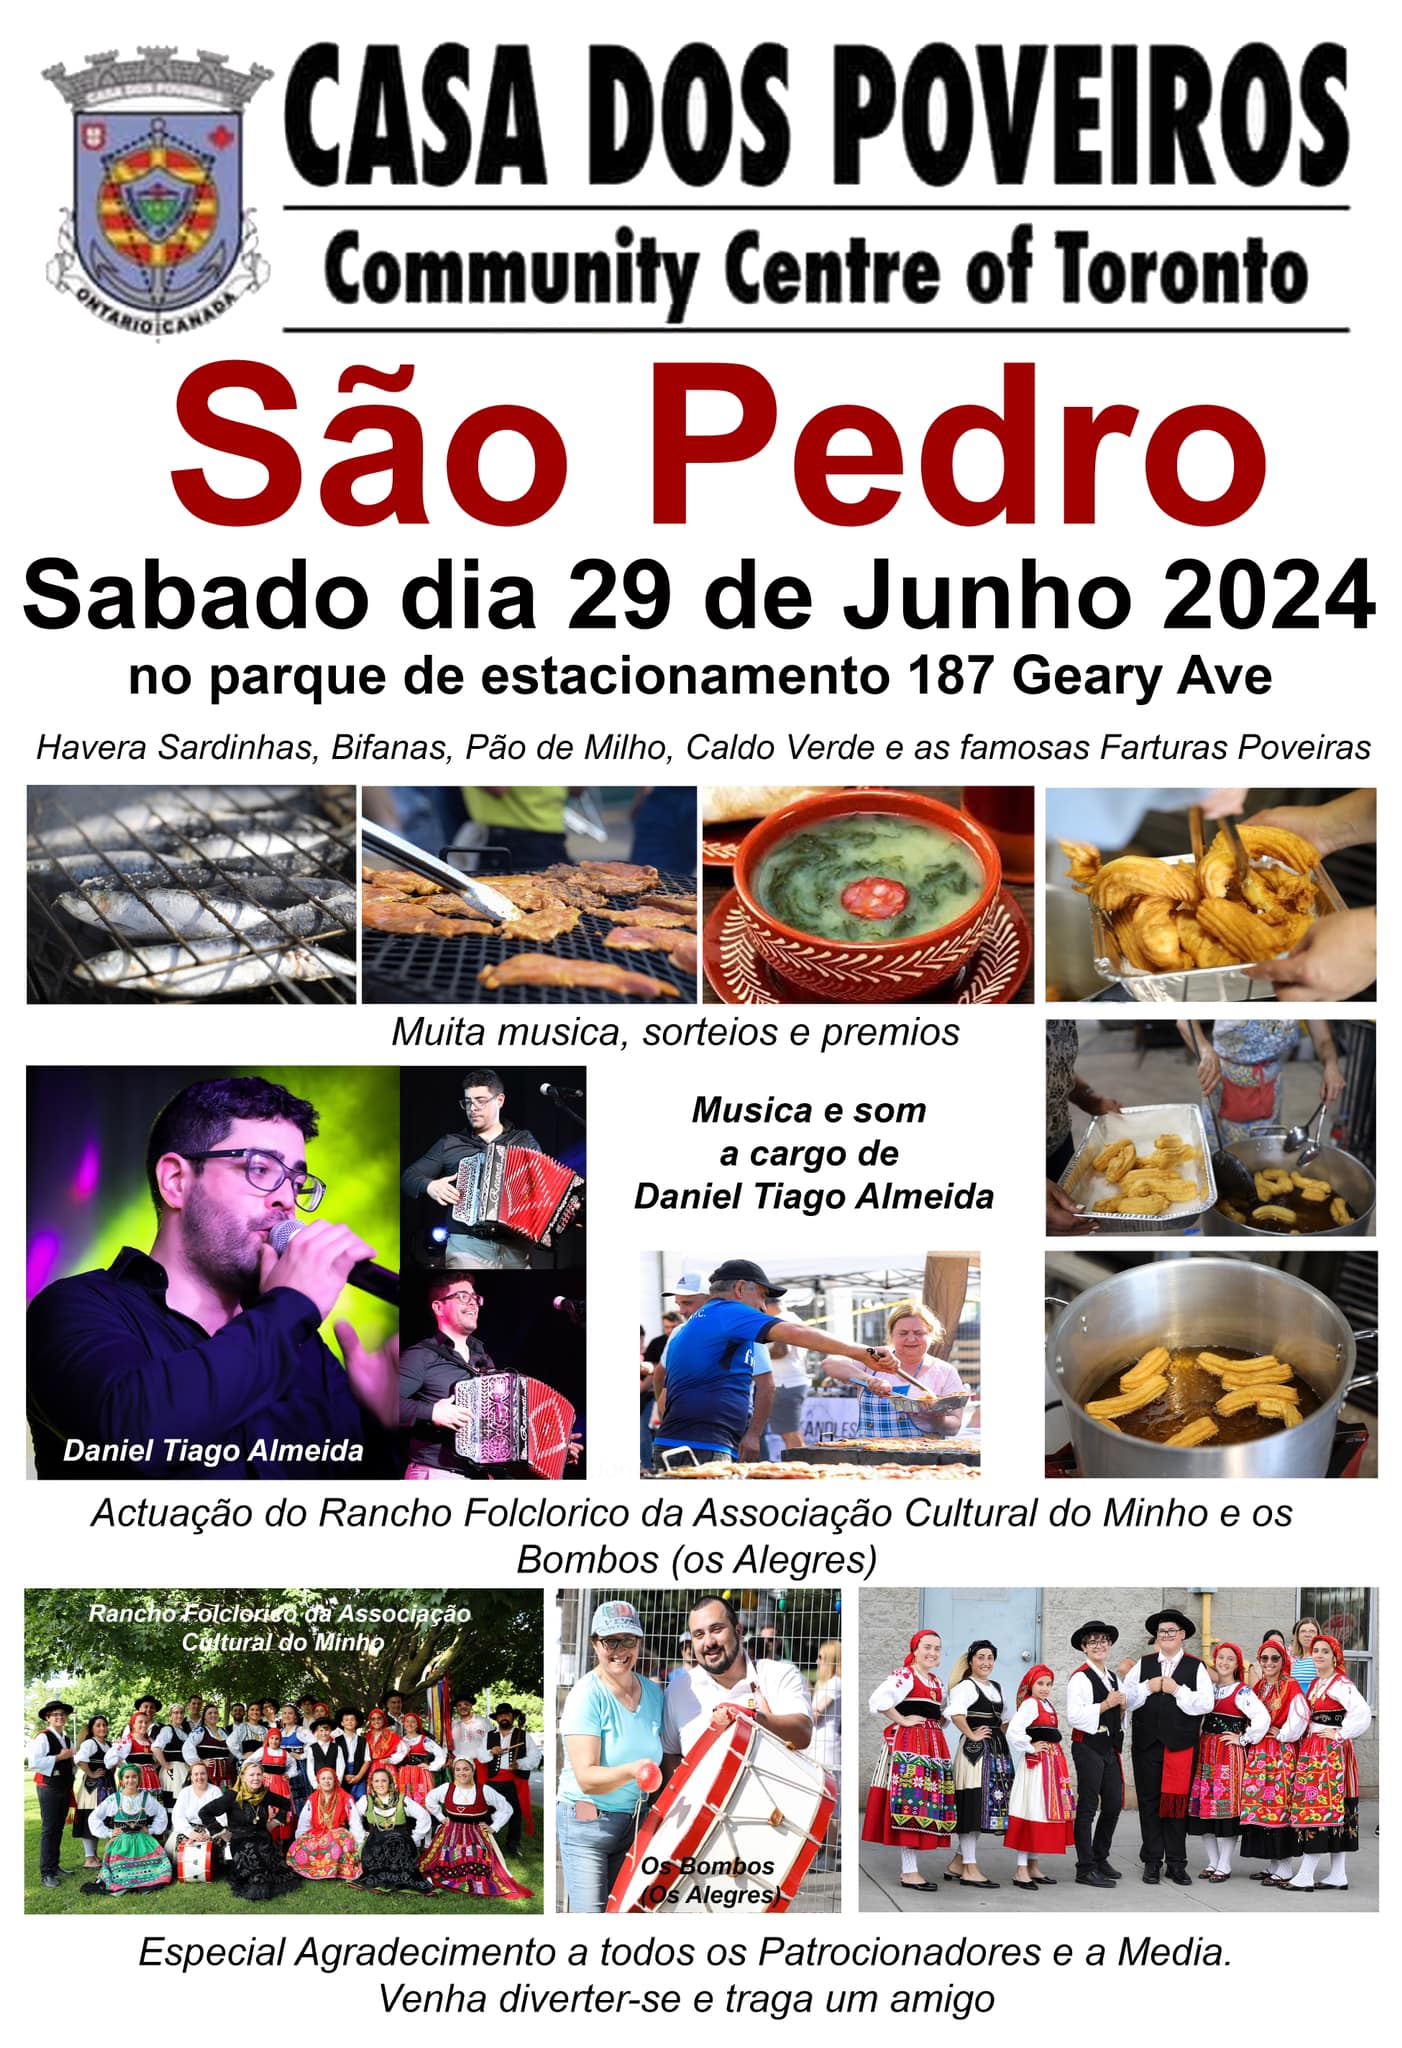 Festa de São Pedro event poster by Casa dos Poveiros in Toronto, featuring Portuguese folk music and traditional foods, on June 29, 2024.